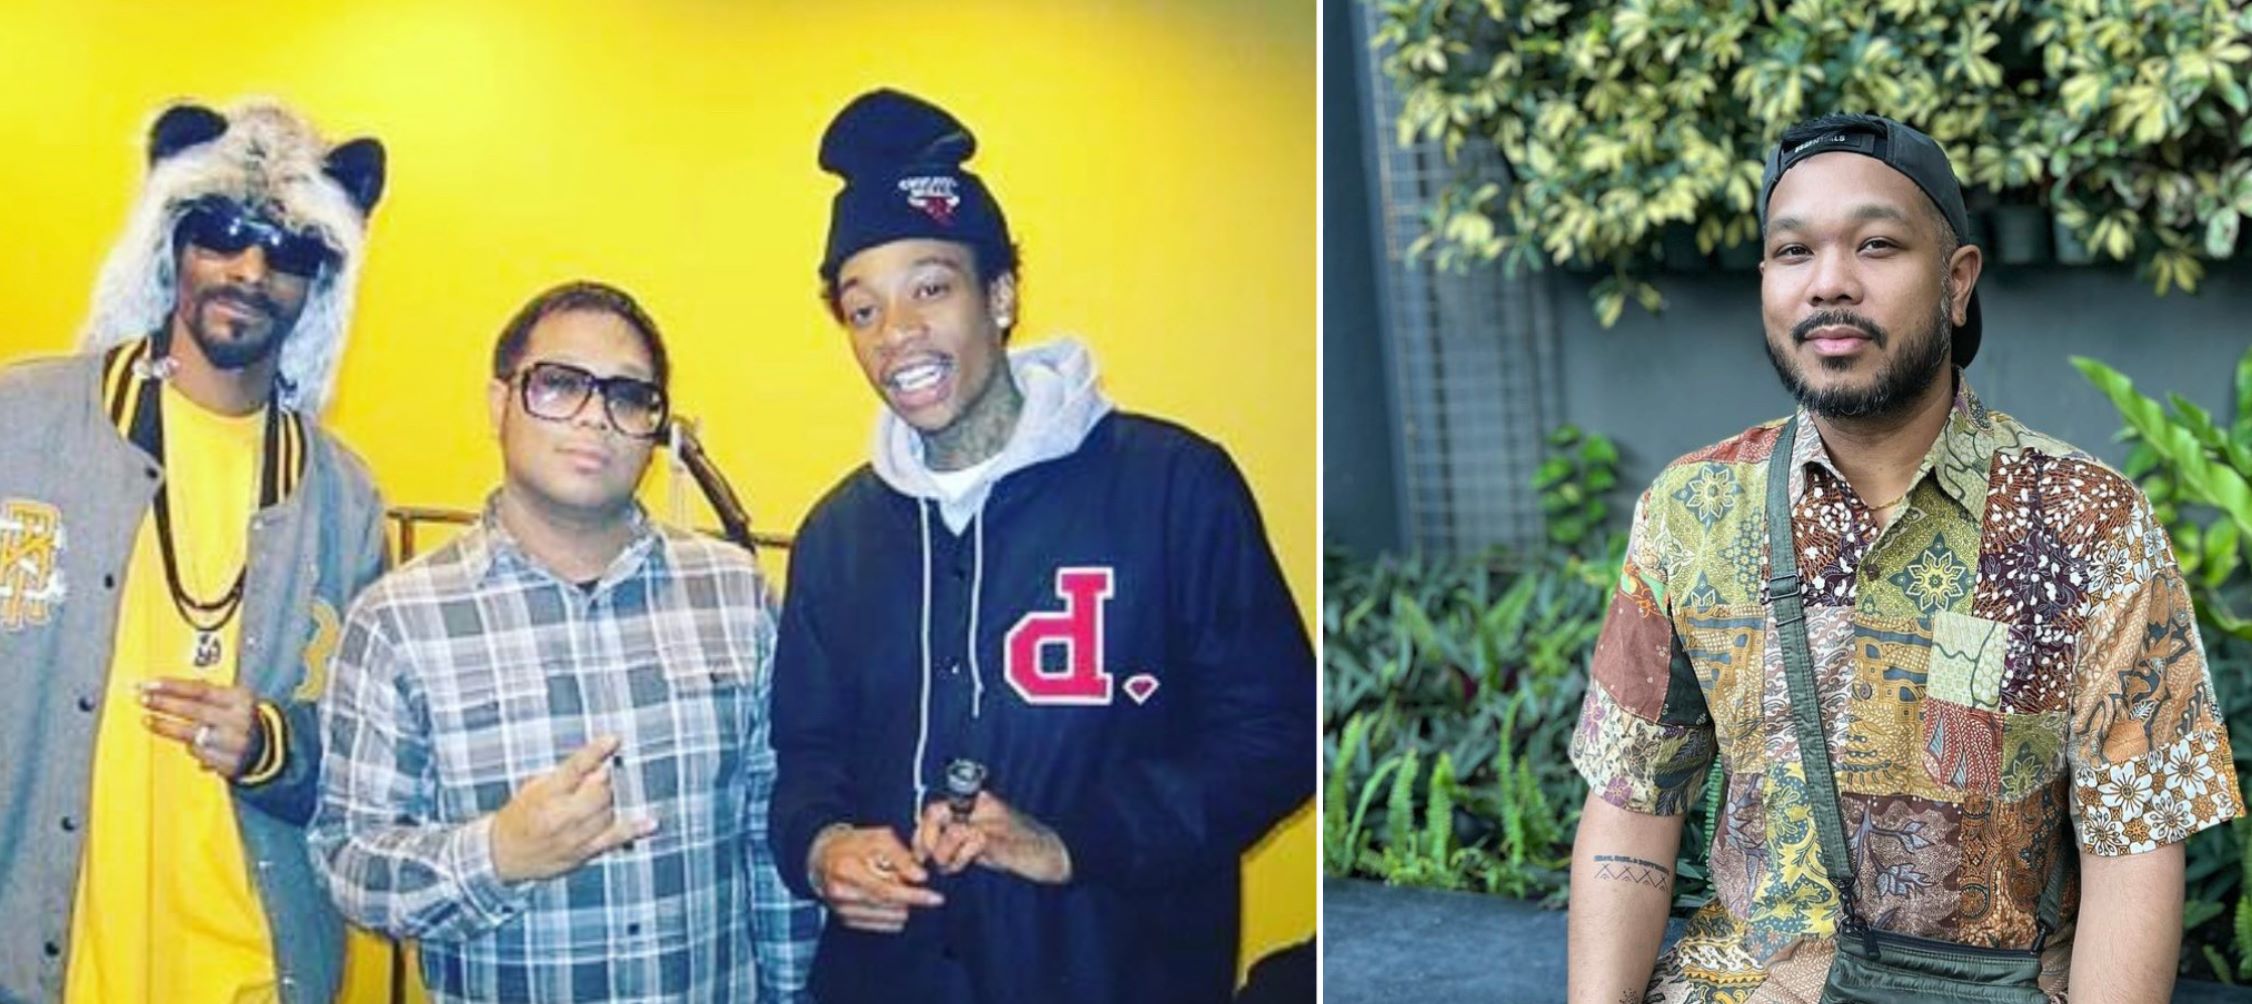 Here We Go Again: Brandon ‘DJ Bonics’ Glova Gets Ready for the “High School Reunion Tour” with Superstar Duo Snoop Dogg and Wiz Khalifa